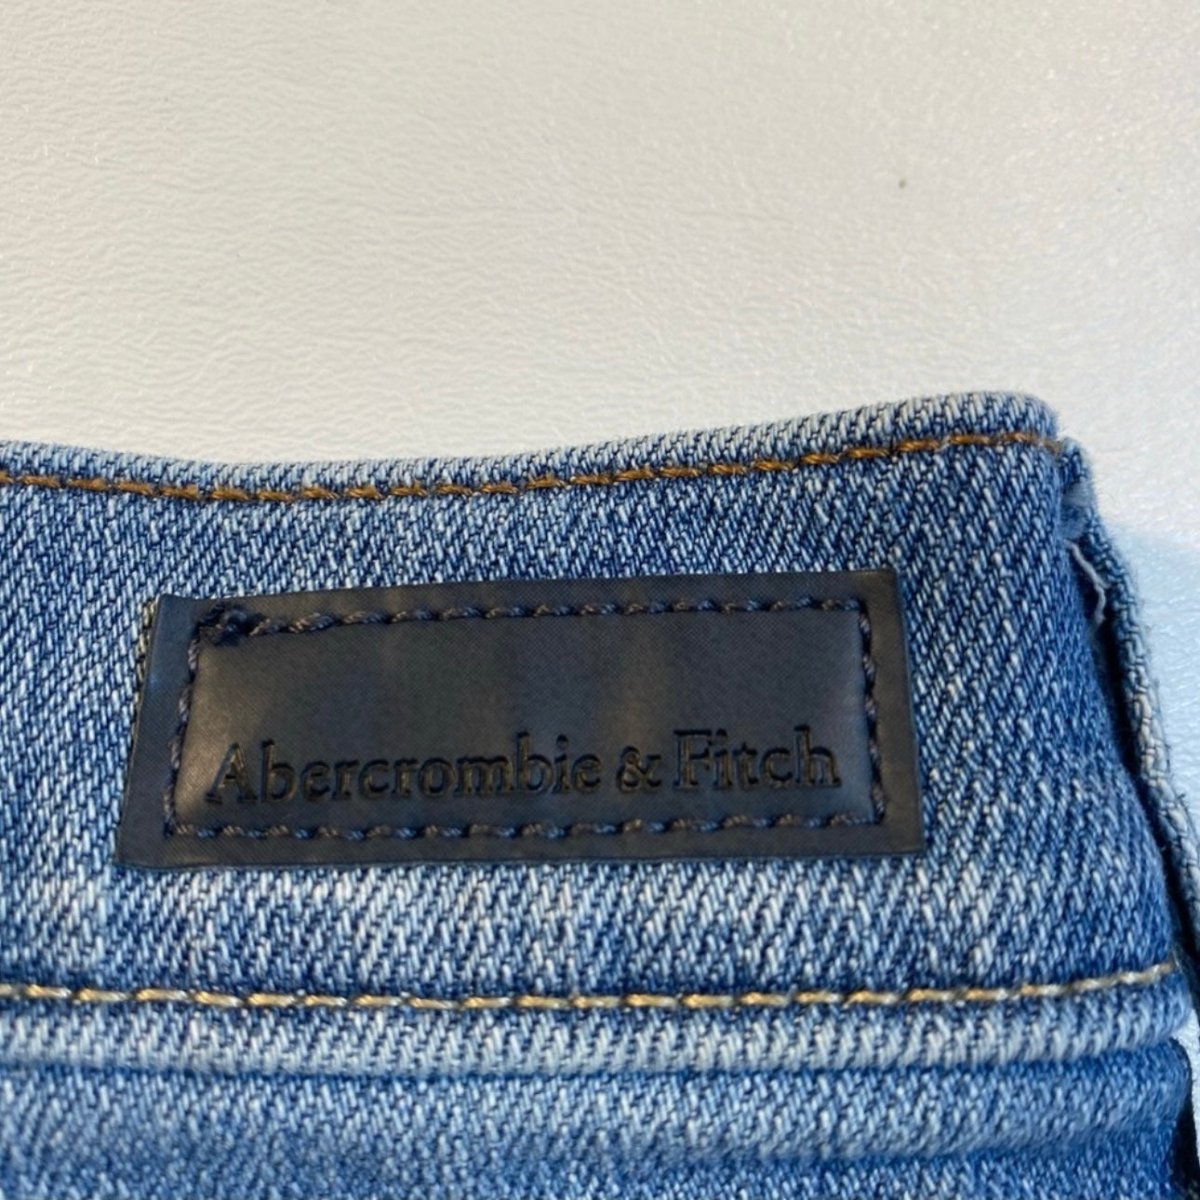 Abercrombie Fitch - Abercrombie Fitch Size 26 Distressed Bleach Splatter Cutoff Cuffed Denim Shorts - Shorts - Afterglow Market